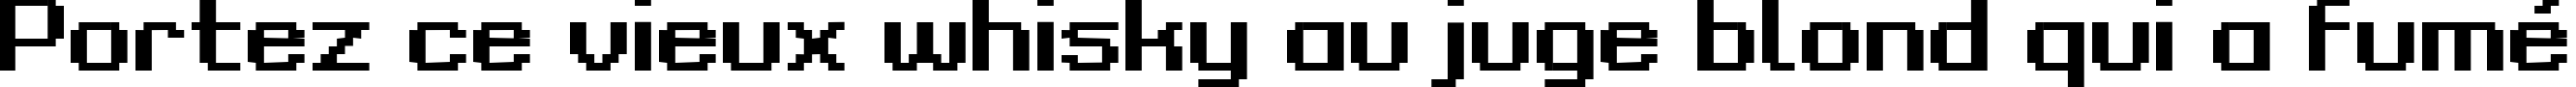 Пример написания шрифтом Grixel Kyrou 9 Regular Bold текста на французском